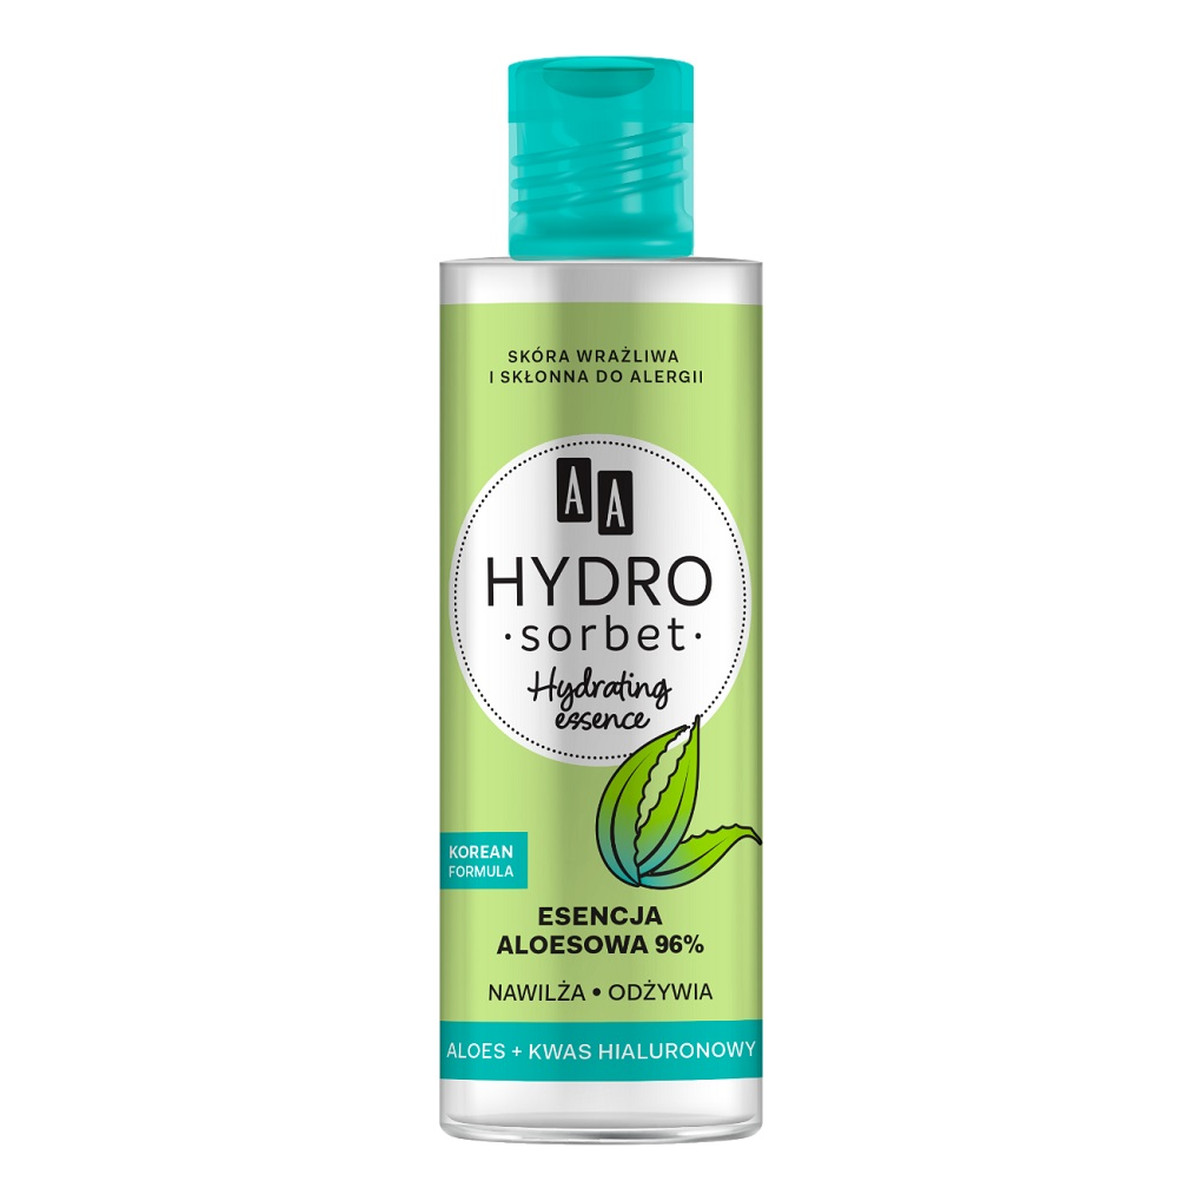 AA Hydro Sorbet Korean Formula Hydrating Essence esencja aloesowa 96% 100ml